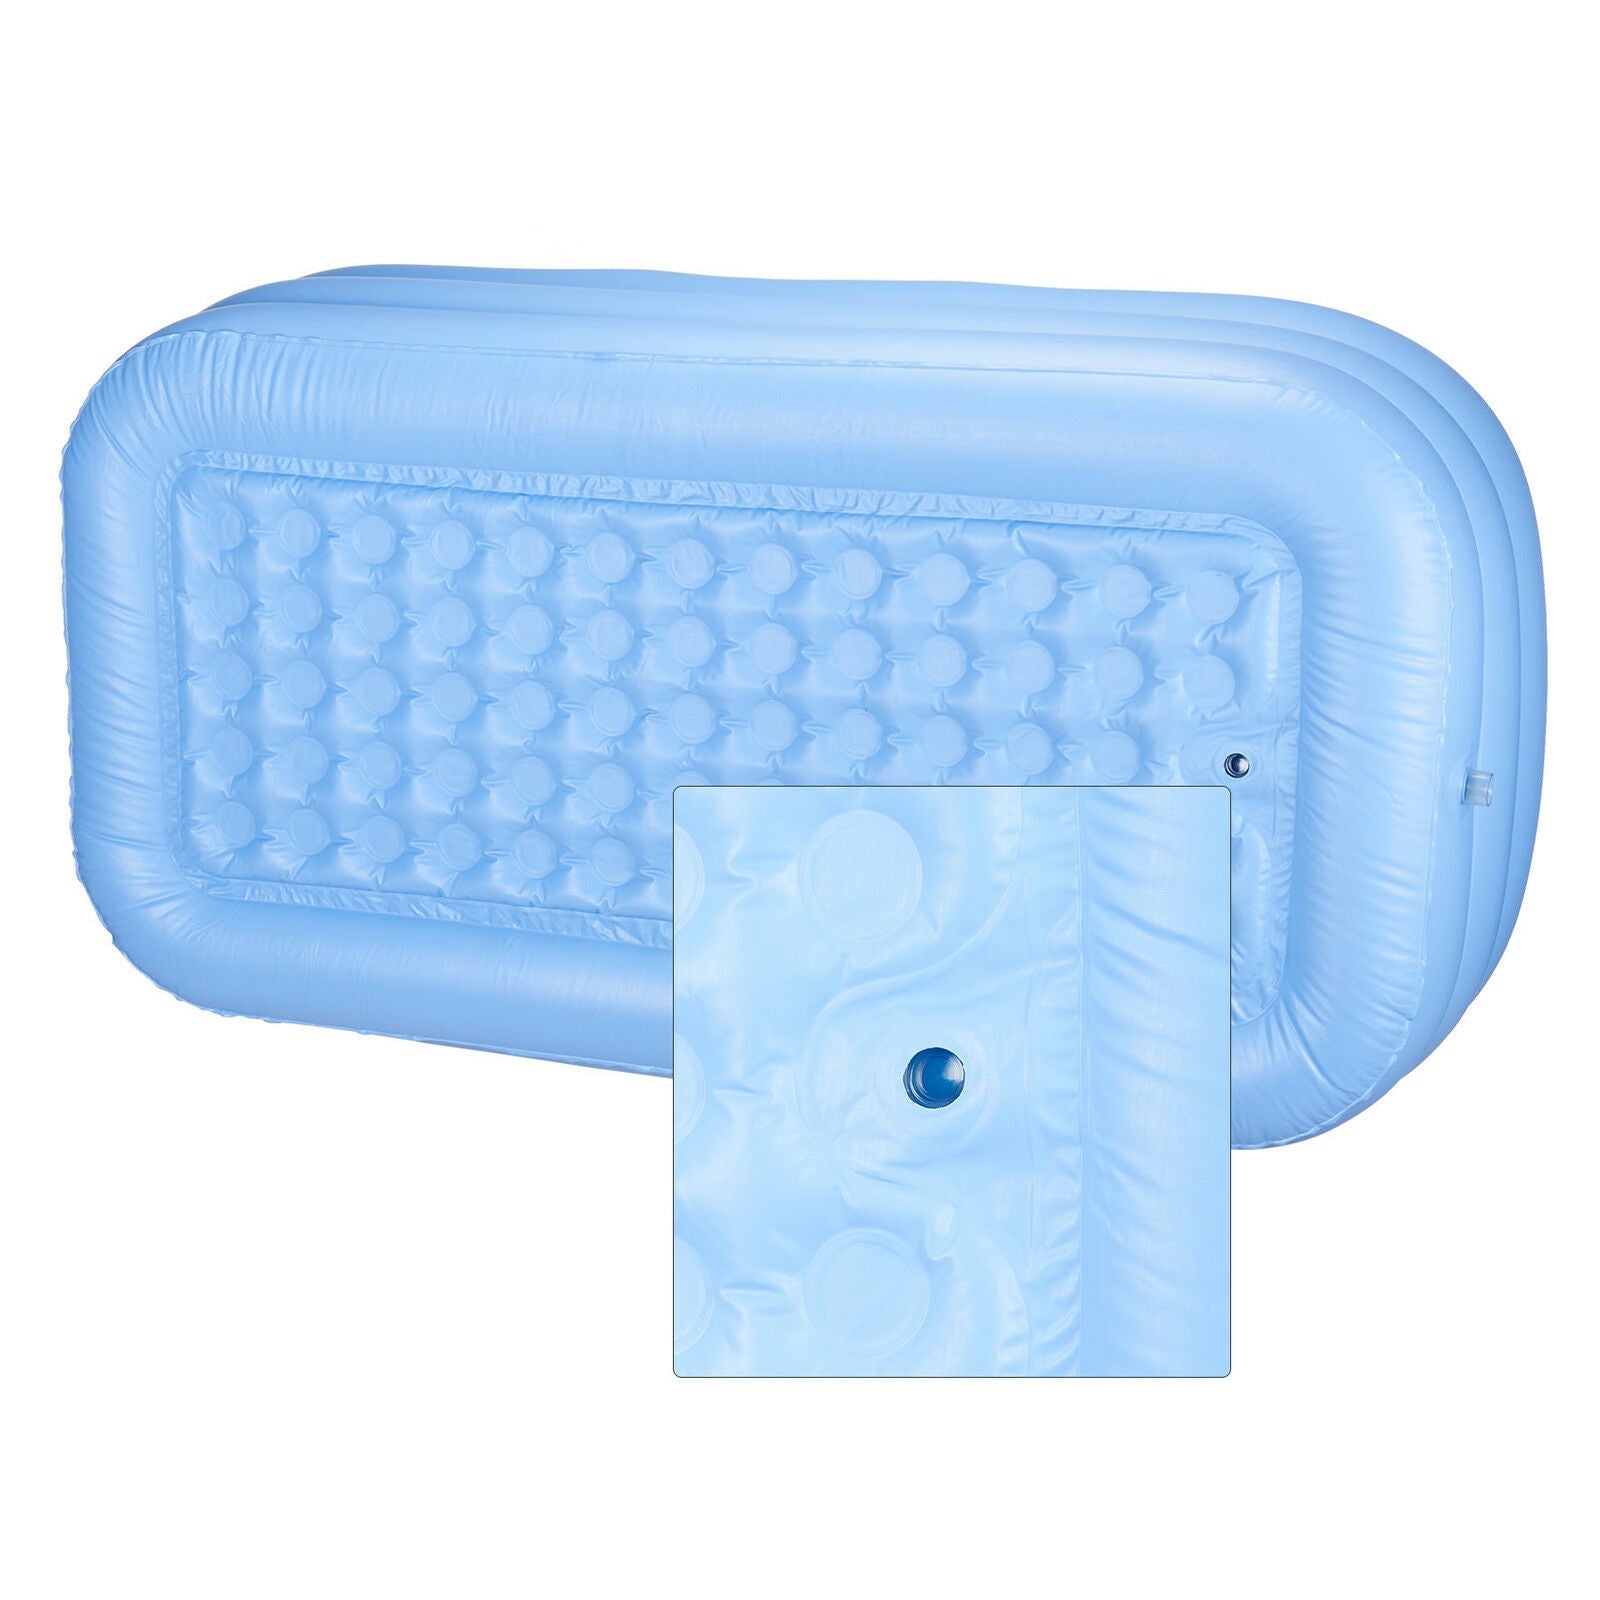 Portable bathtub PVC folding bathtub fast inflatable Spa For Adutls